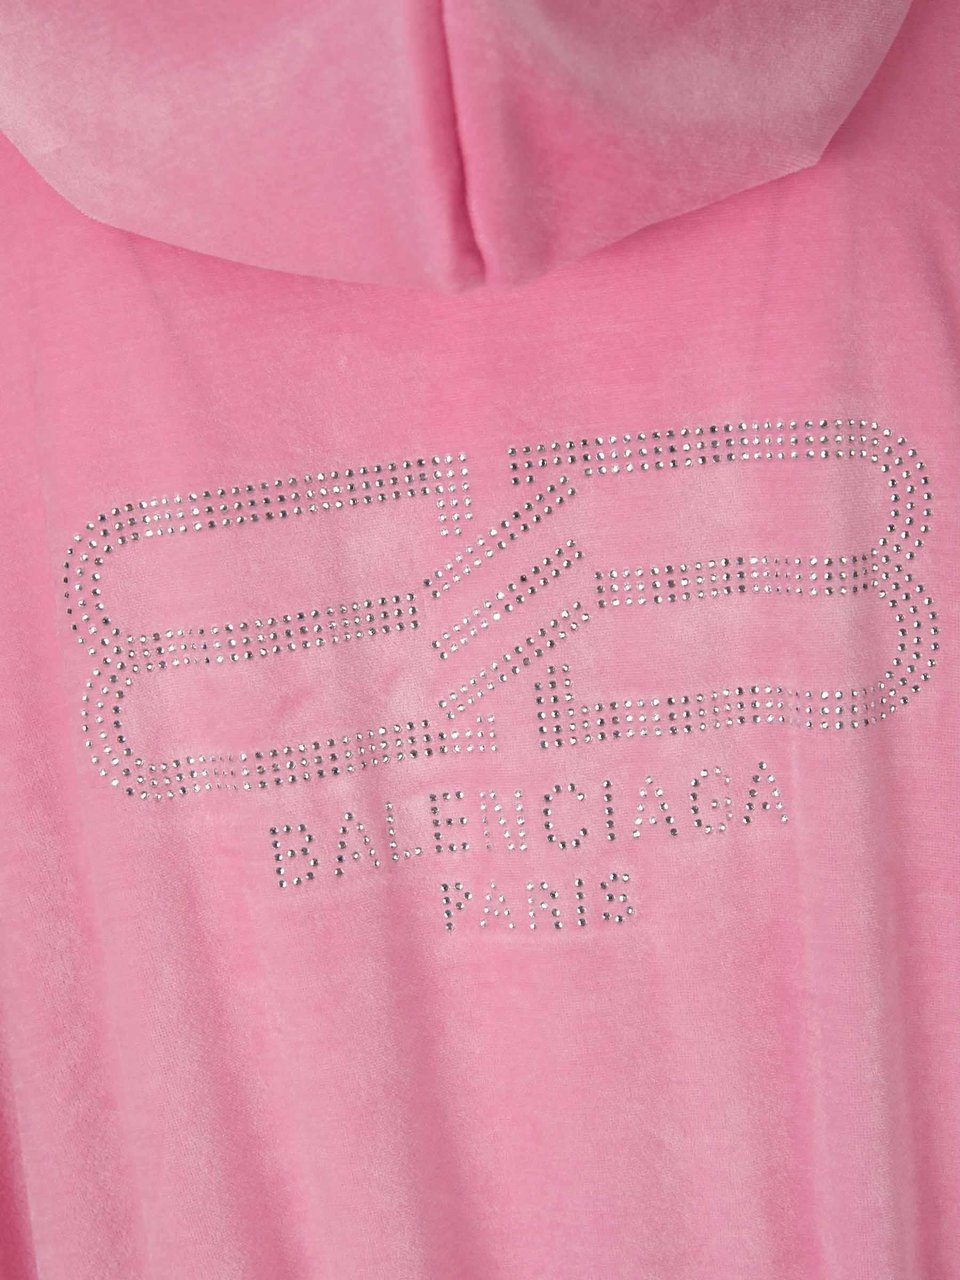 Balenciaga Paris Velvet Sweatshirt Roze